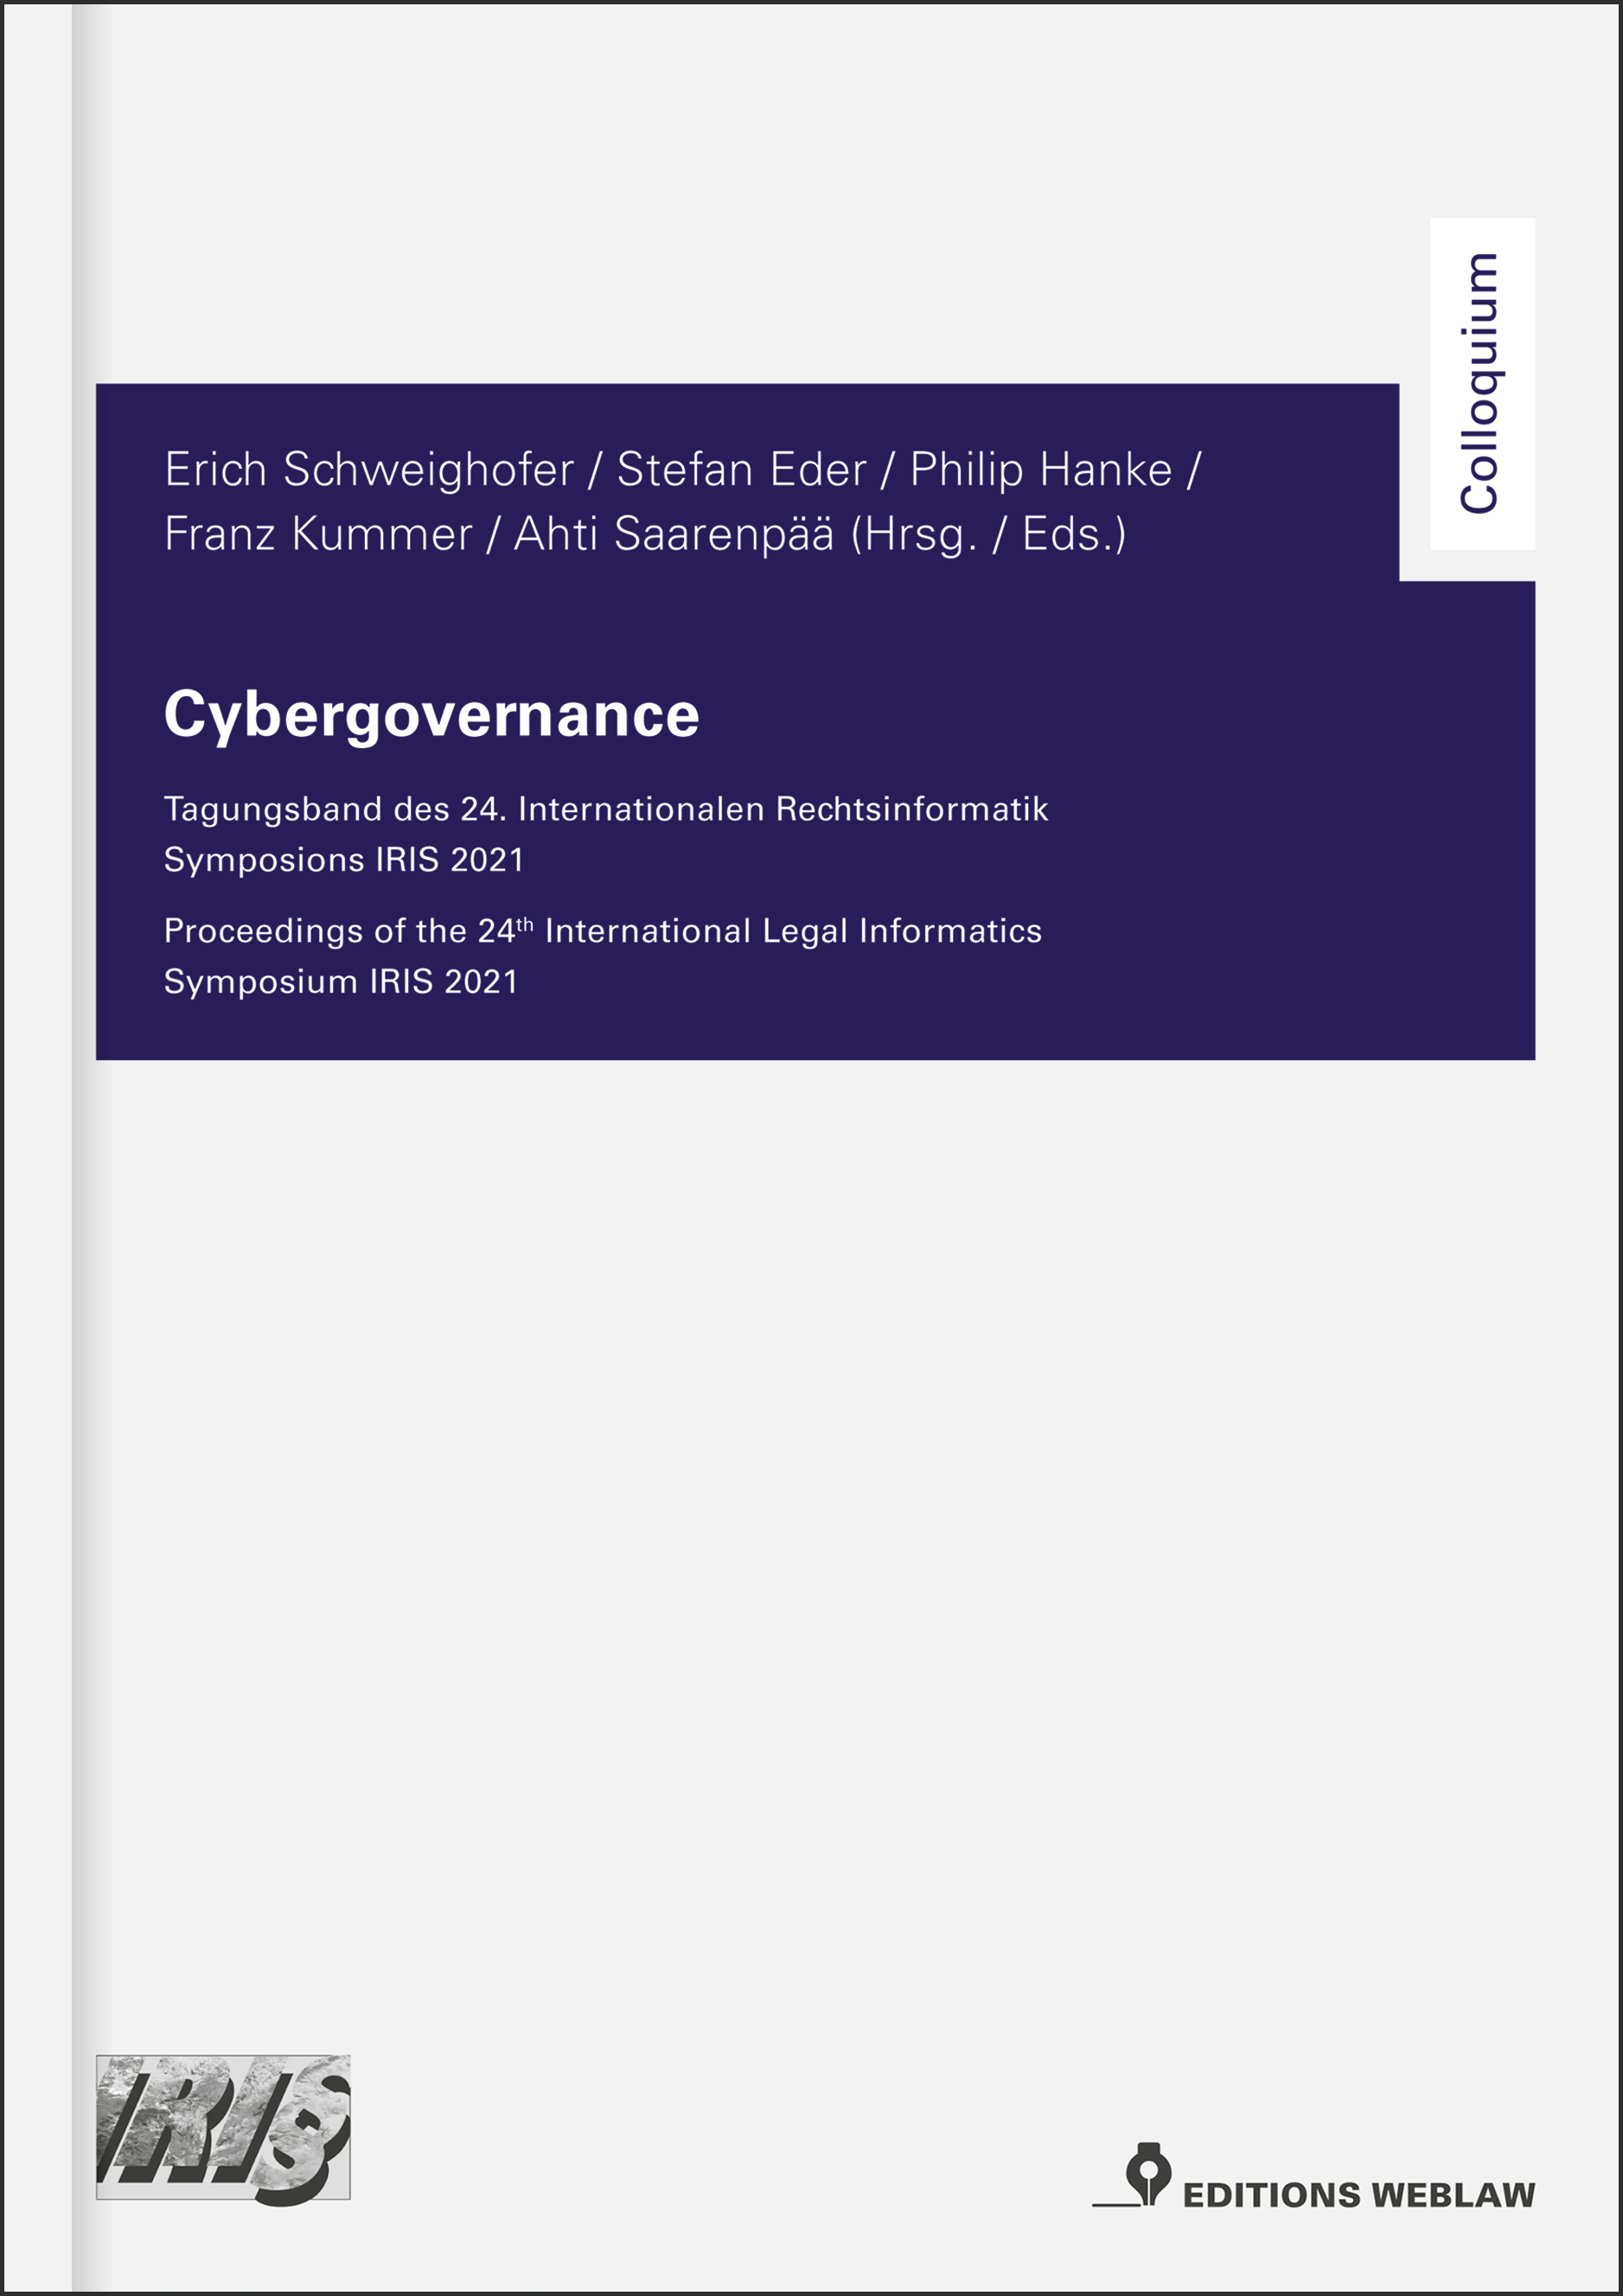 Nouveau aux Editions Weblaw : Cybergovernance – The IRIS Conference Proceedings 2021.